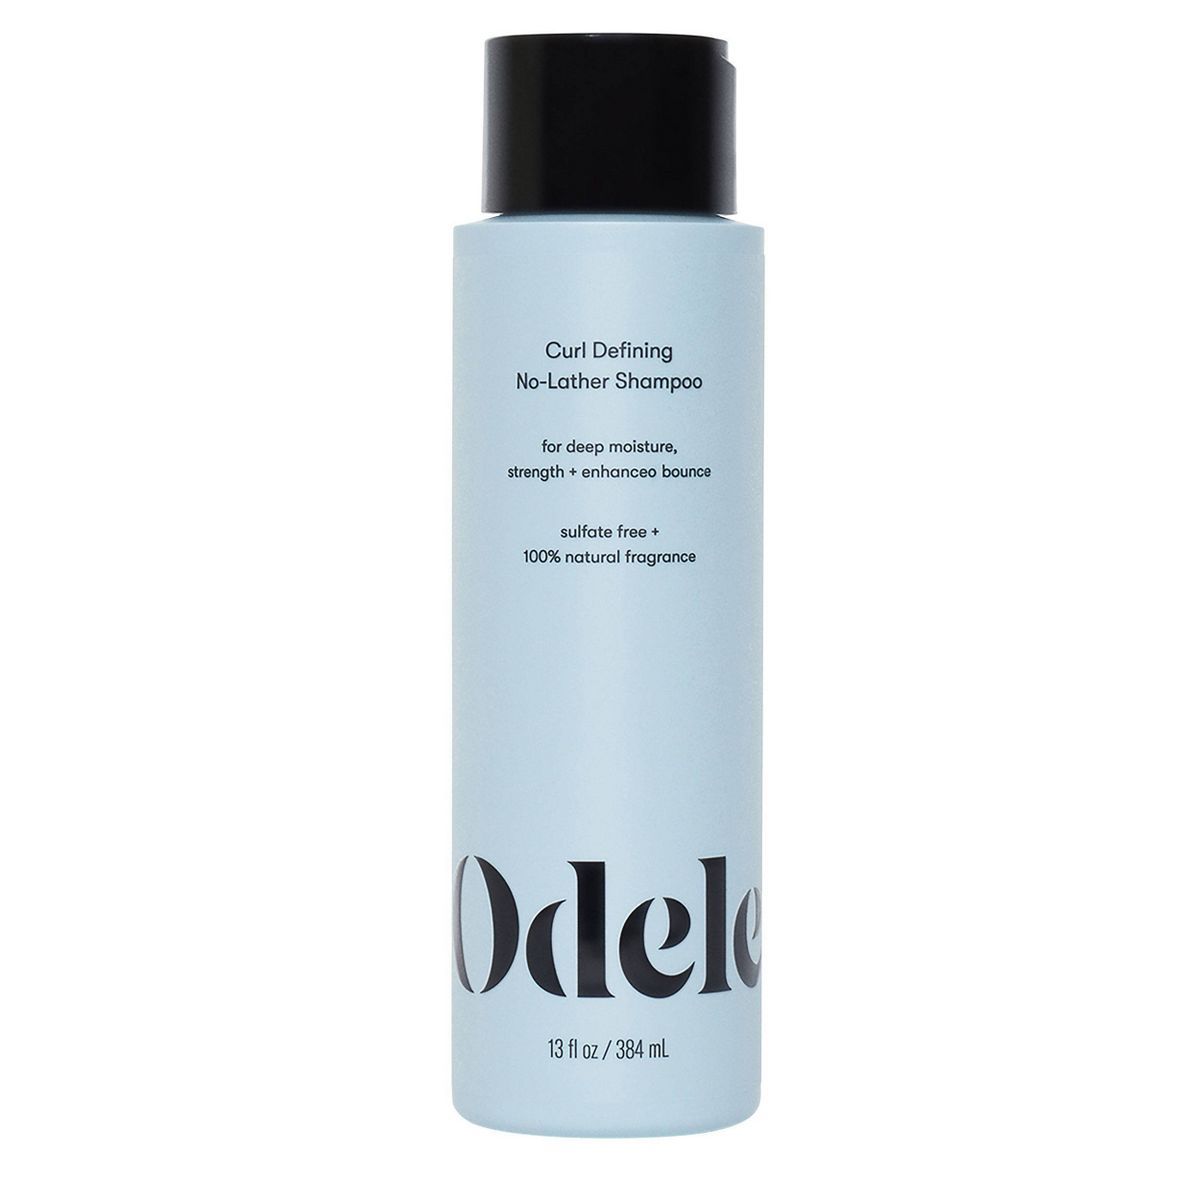 Odele Curl Defining No-Lather Shampoo for Deep Moisture + Strength - 13 fl oz | Target